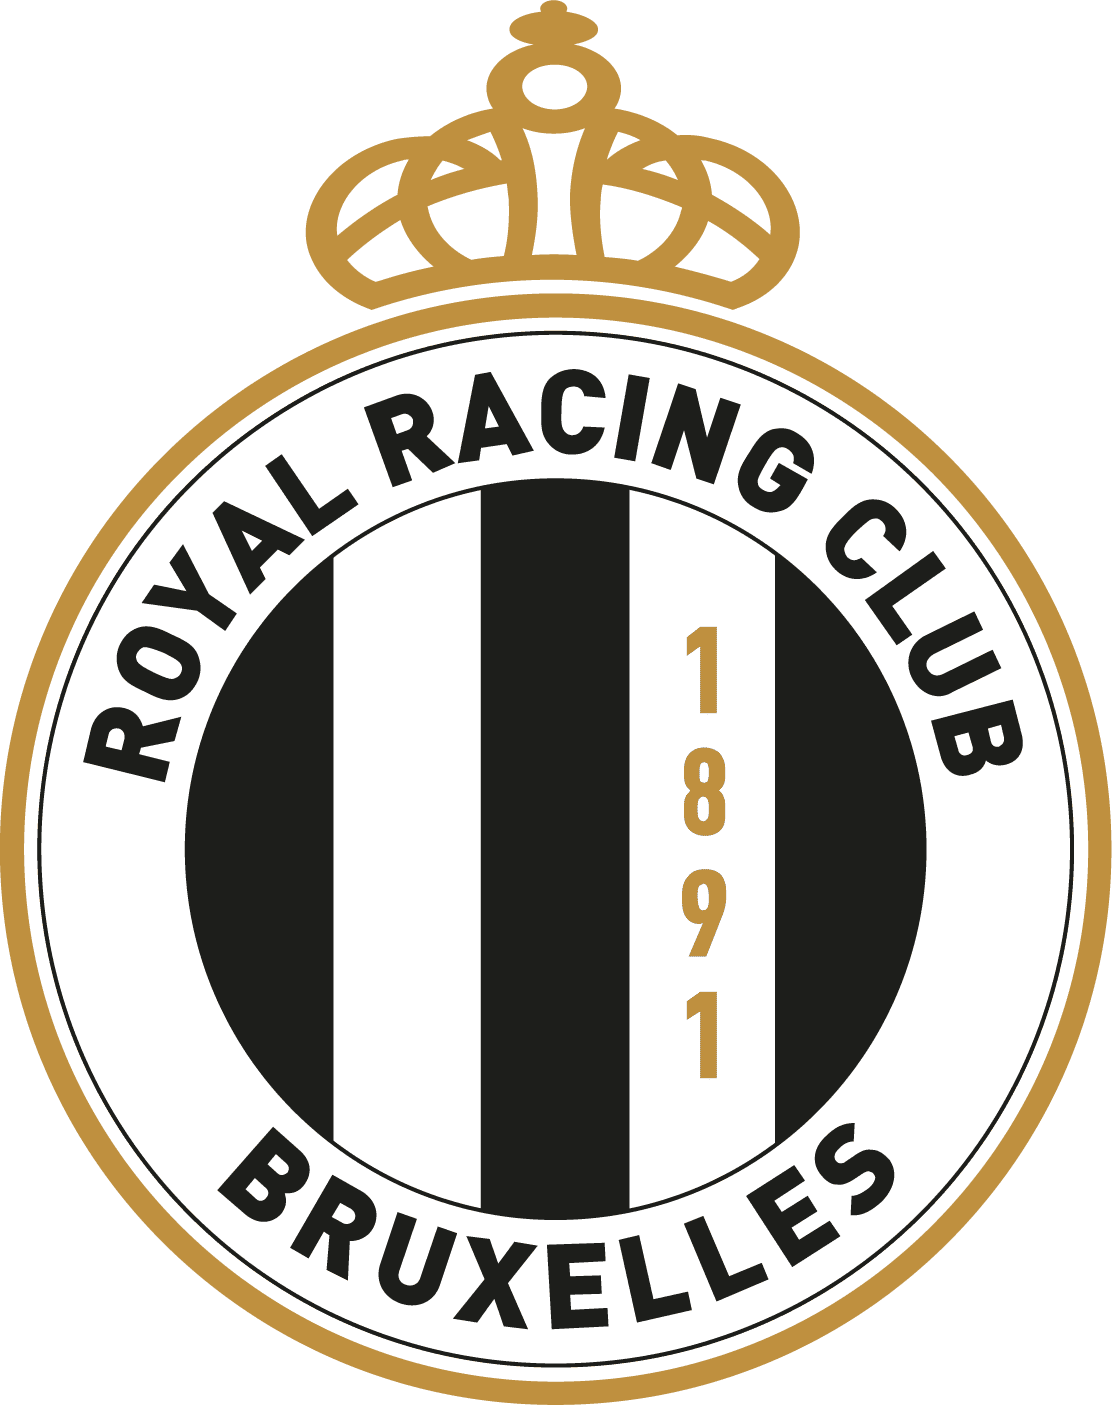 Royal Racing Club Bruxelles brand